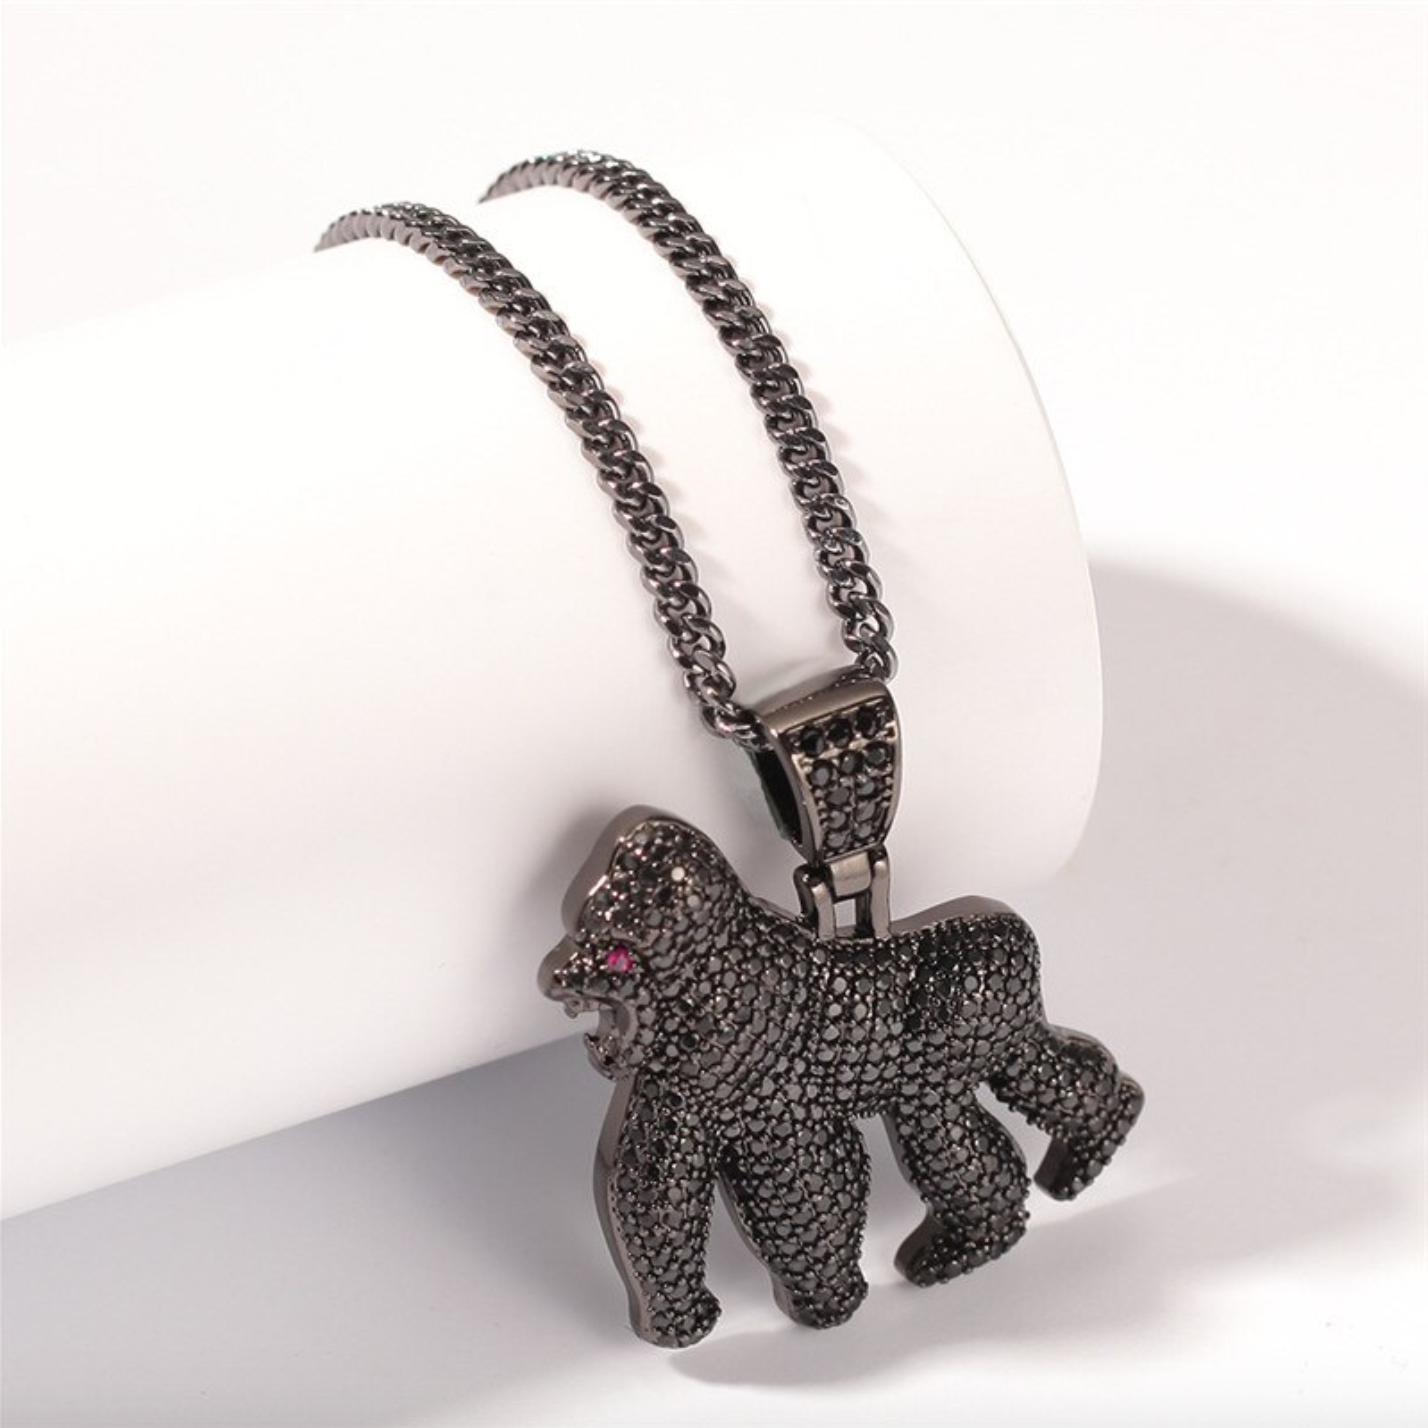 Gorilla Necklace Diamond Black Ape Chain Silver Hip Hop Bling Jewelry Monkey Gorilla Chain Gold Color Metal Alloy 24in.